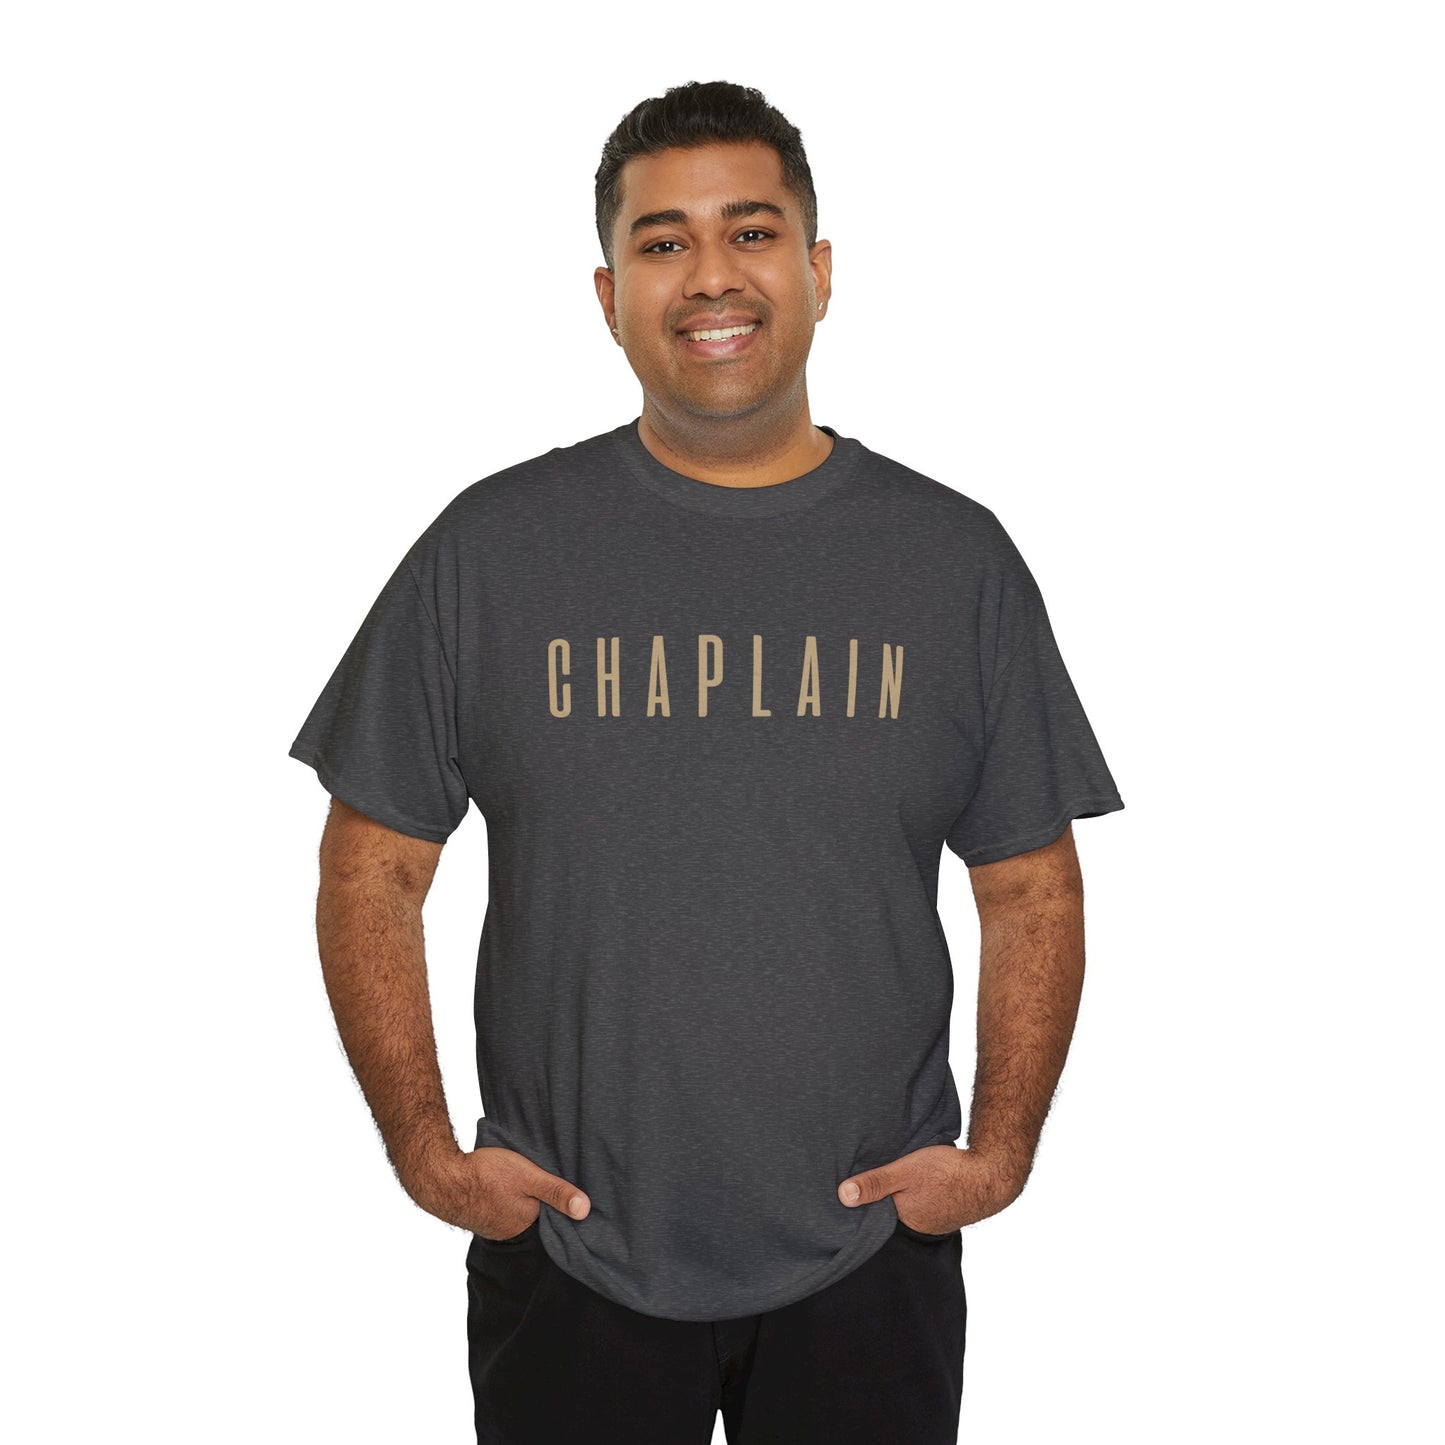 CHAPLAIN by Chaplain Life®